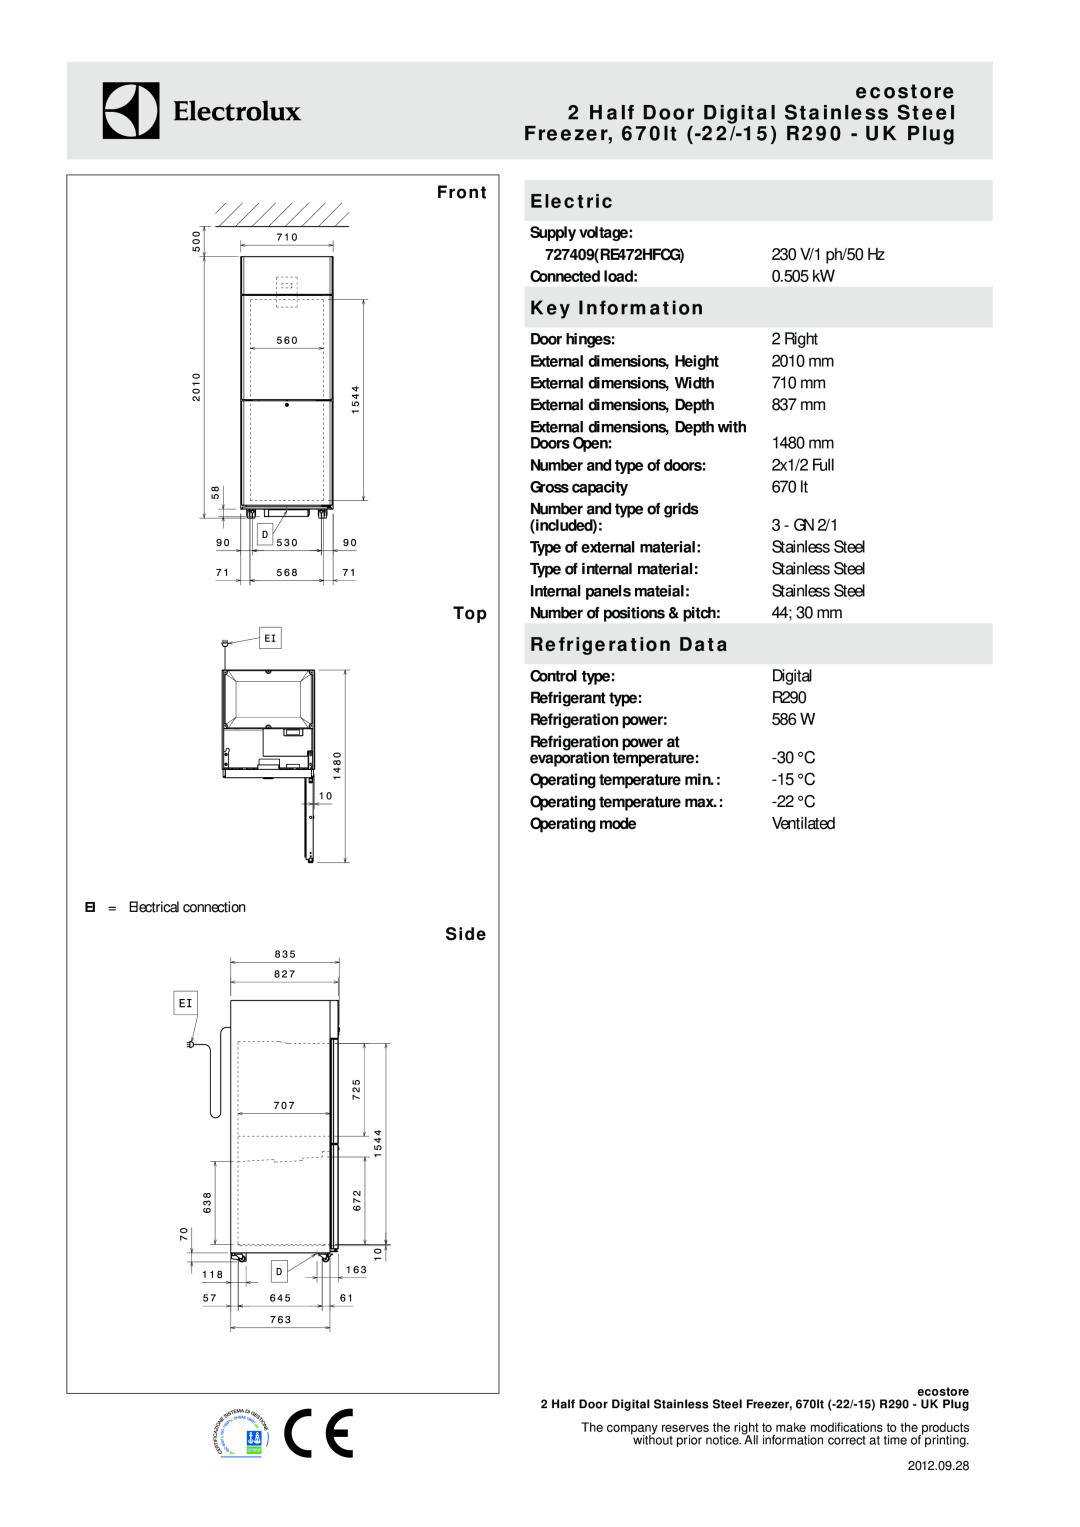 Electrolux R290 manual Electric, Key Information, Refrigeration Data, Front, Side 